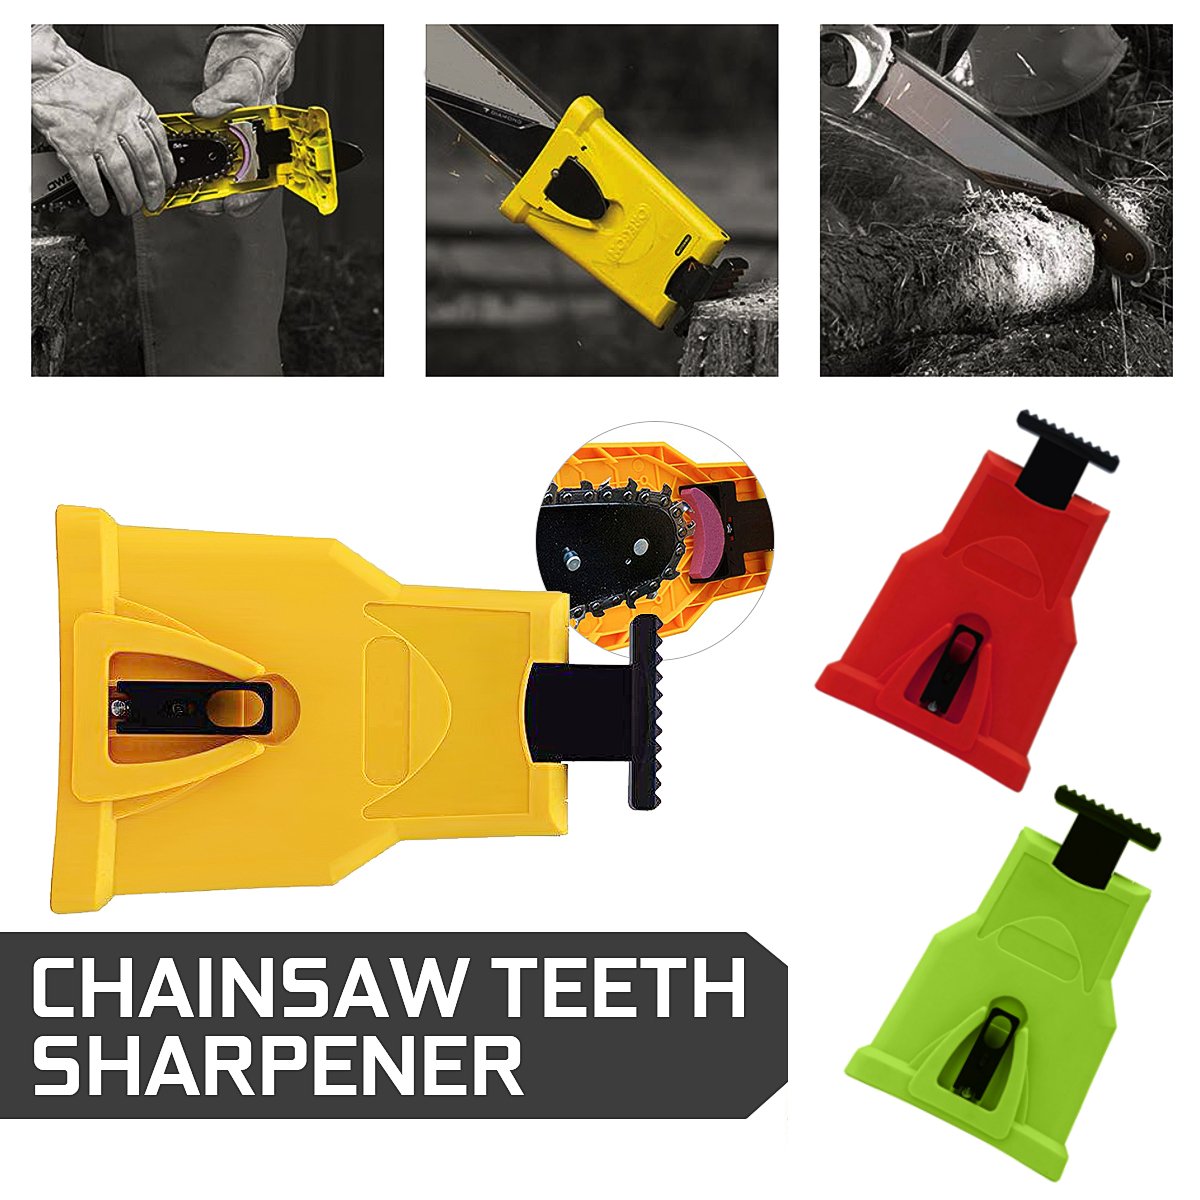 YellowGreenRed-Chainsaw-Teeth-Sharpener-or-Sharpen-Stone-Bar-Mount-Chain-Sharpening-Tool-1538445-10